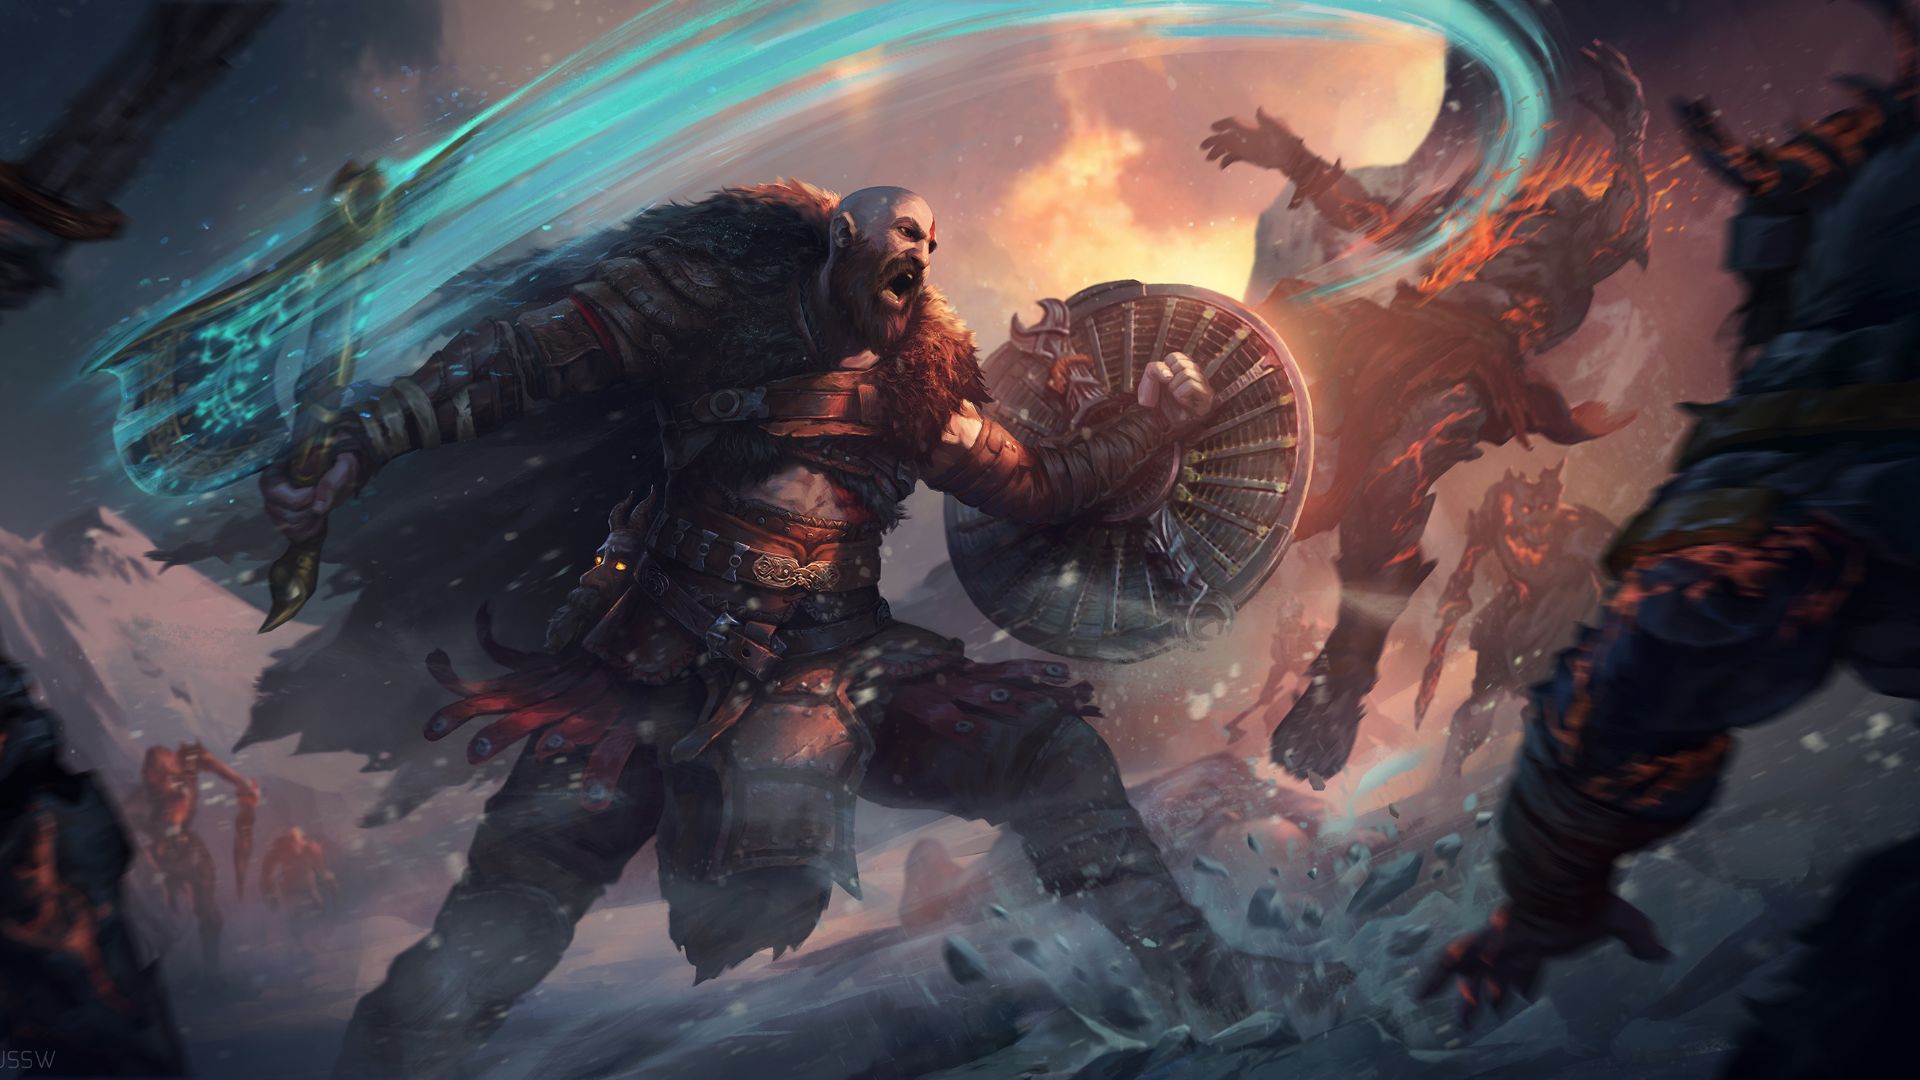 God of War Ragnarok PC Release Date Updates